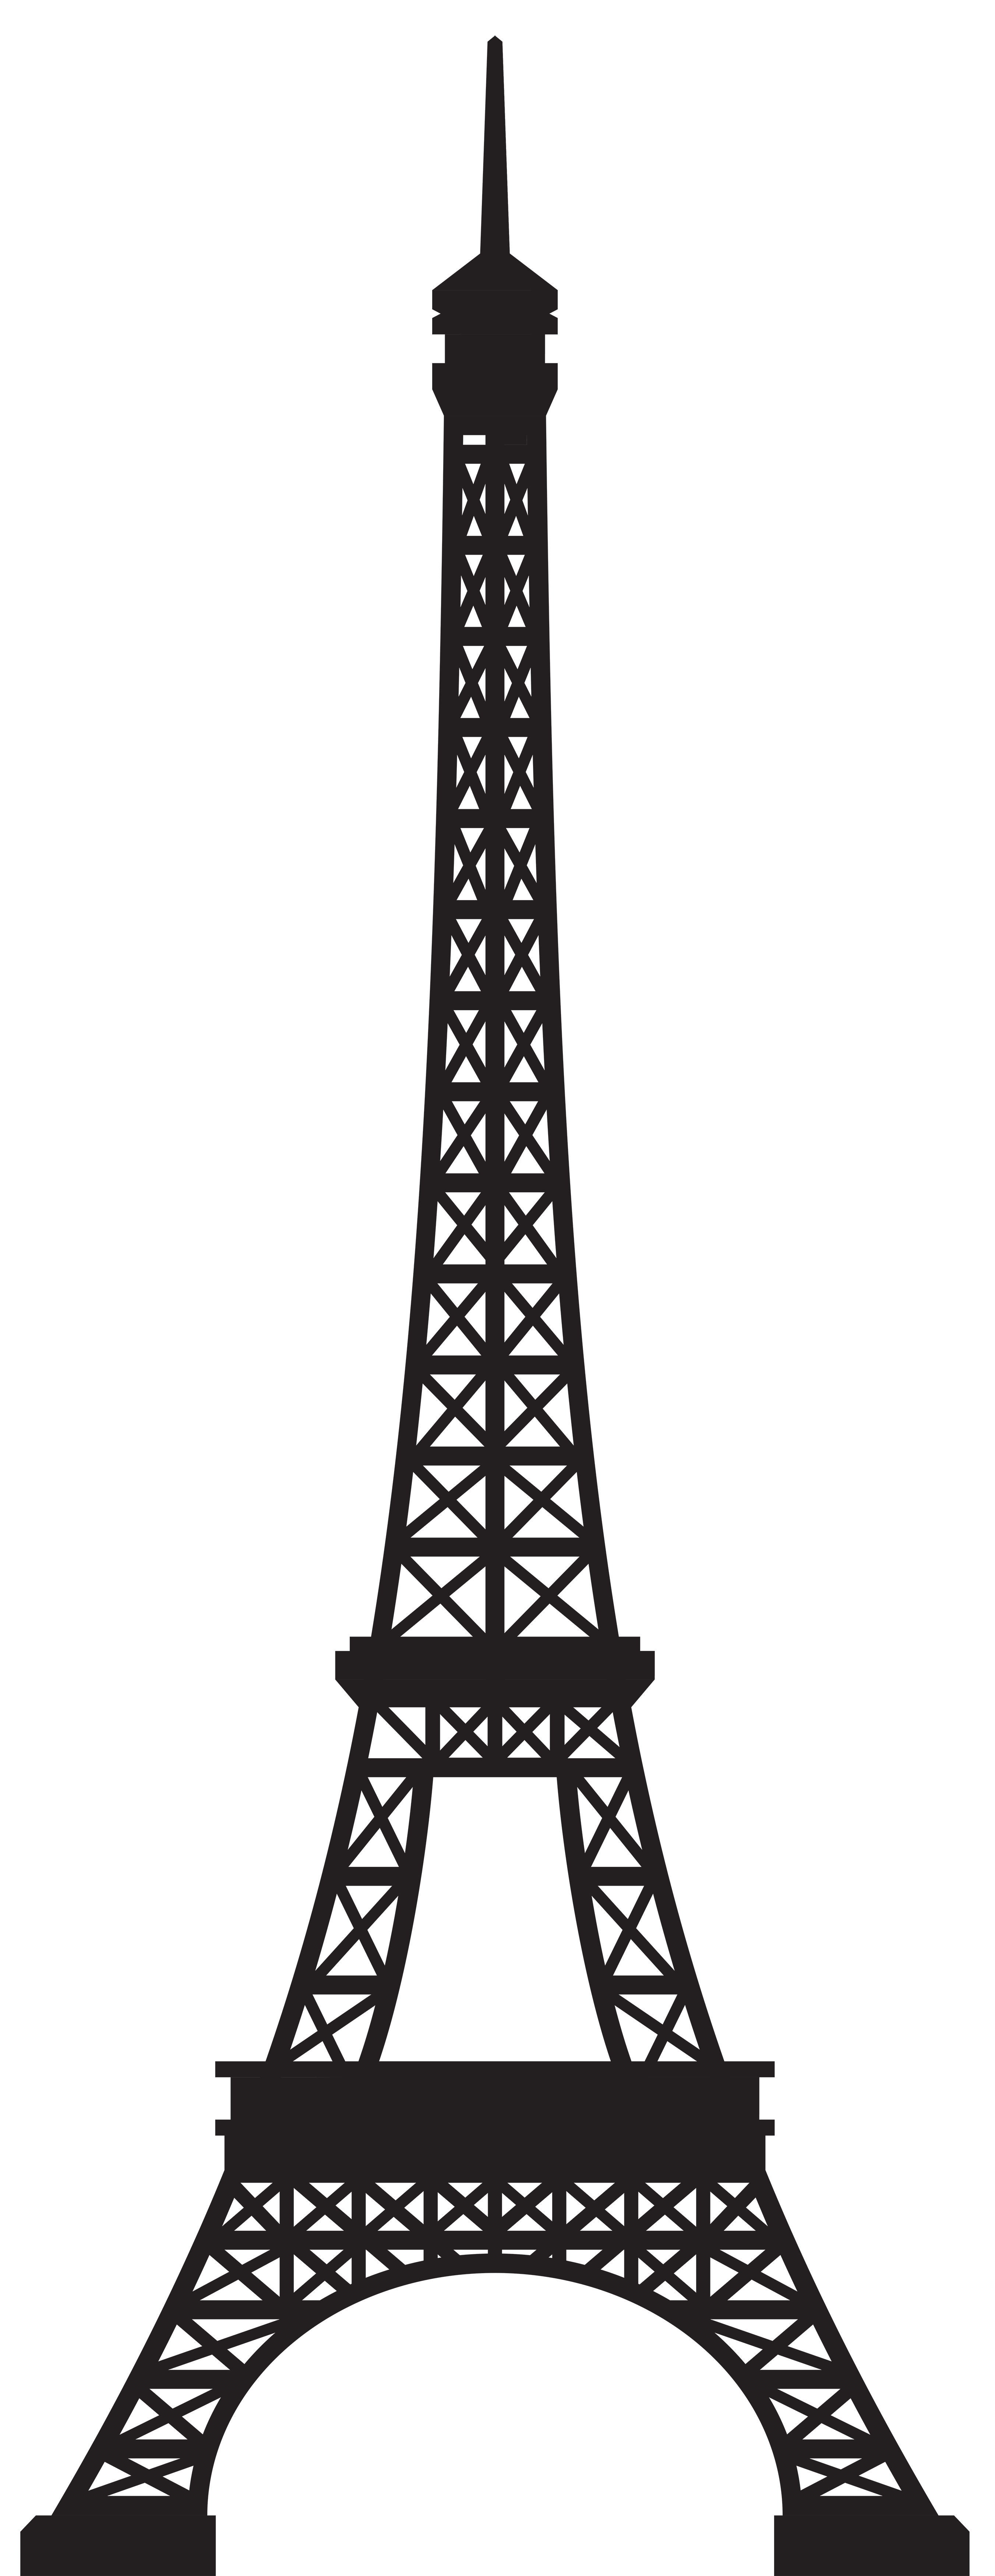 Free Eiffel Tower Clip Art, Download Free Clip Art, Free.